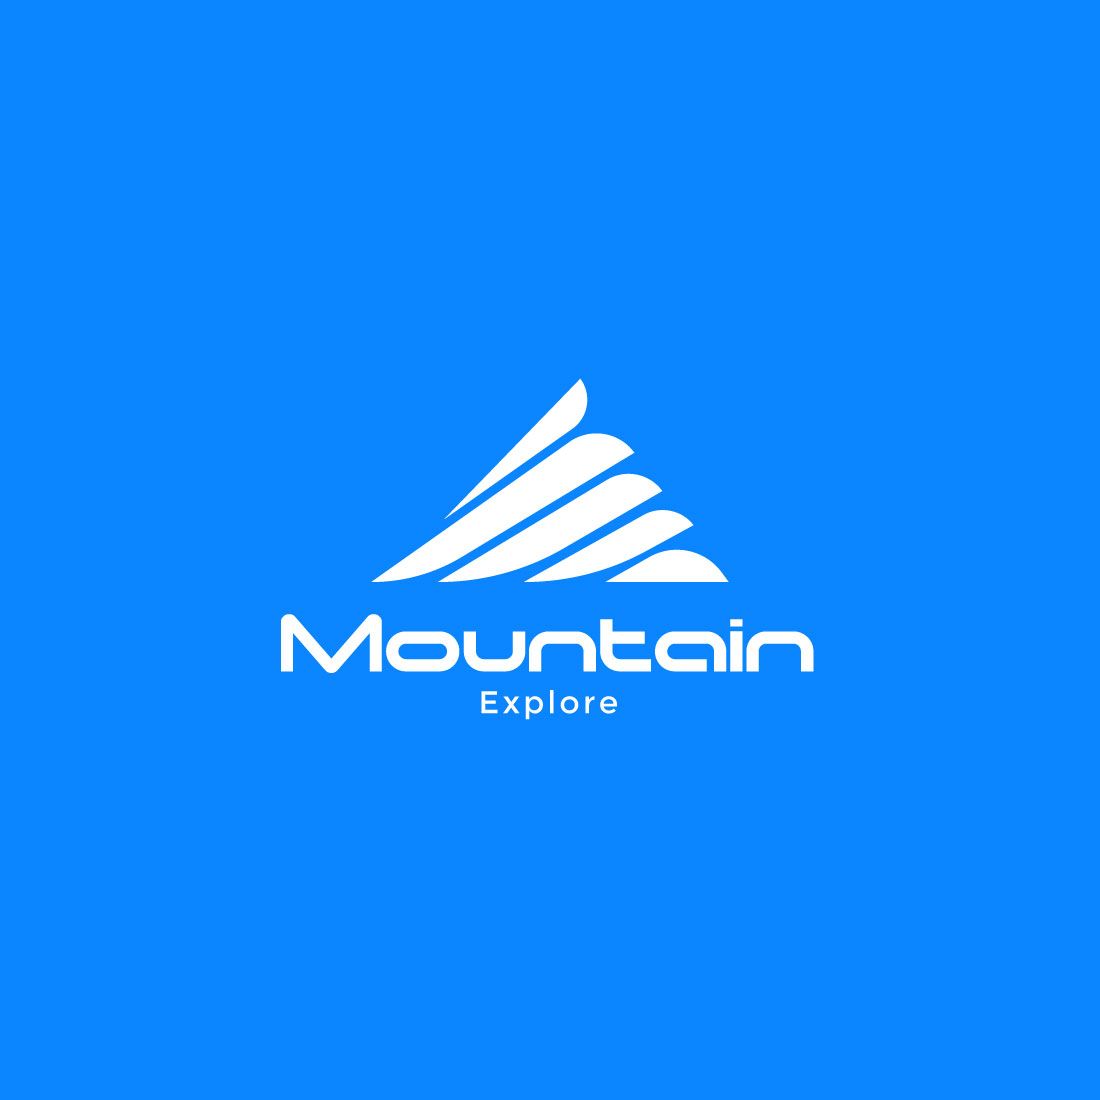 Mountain logo on a blue background.